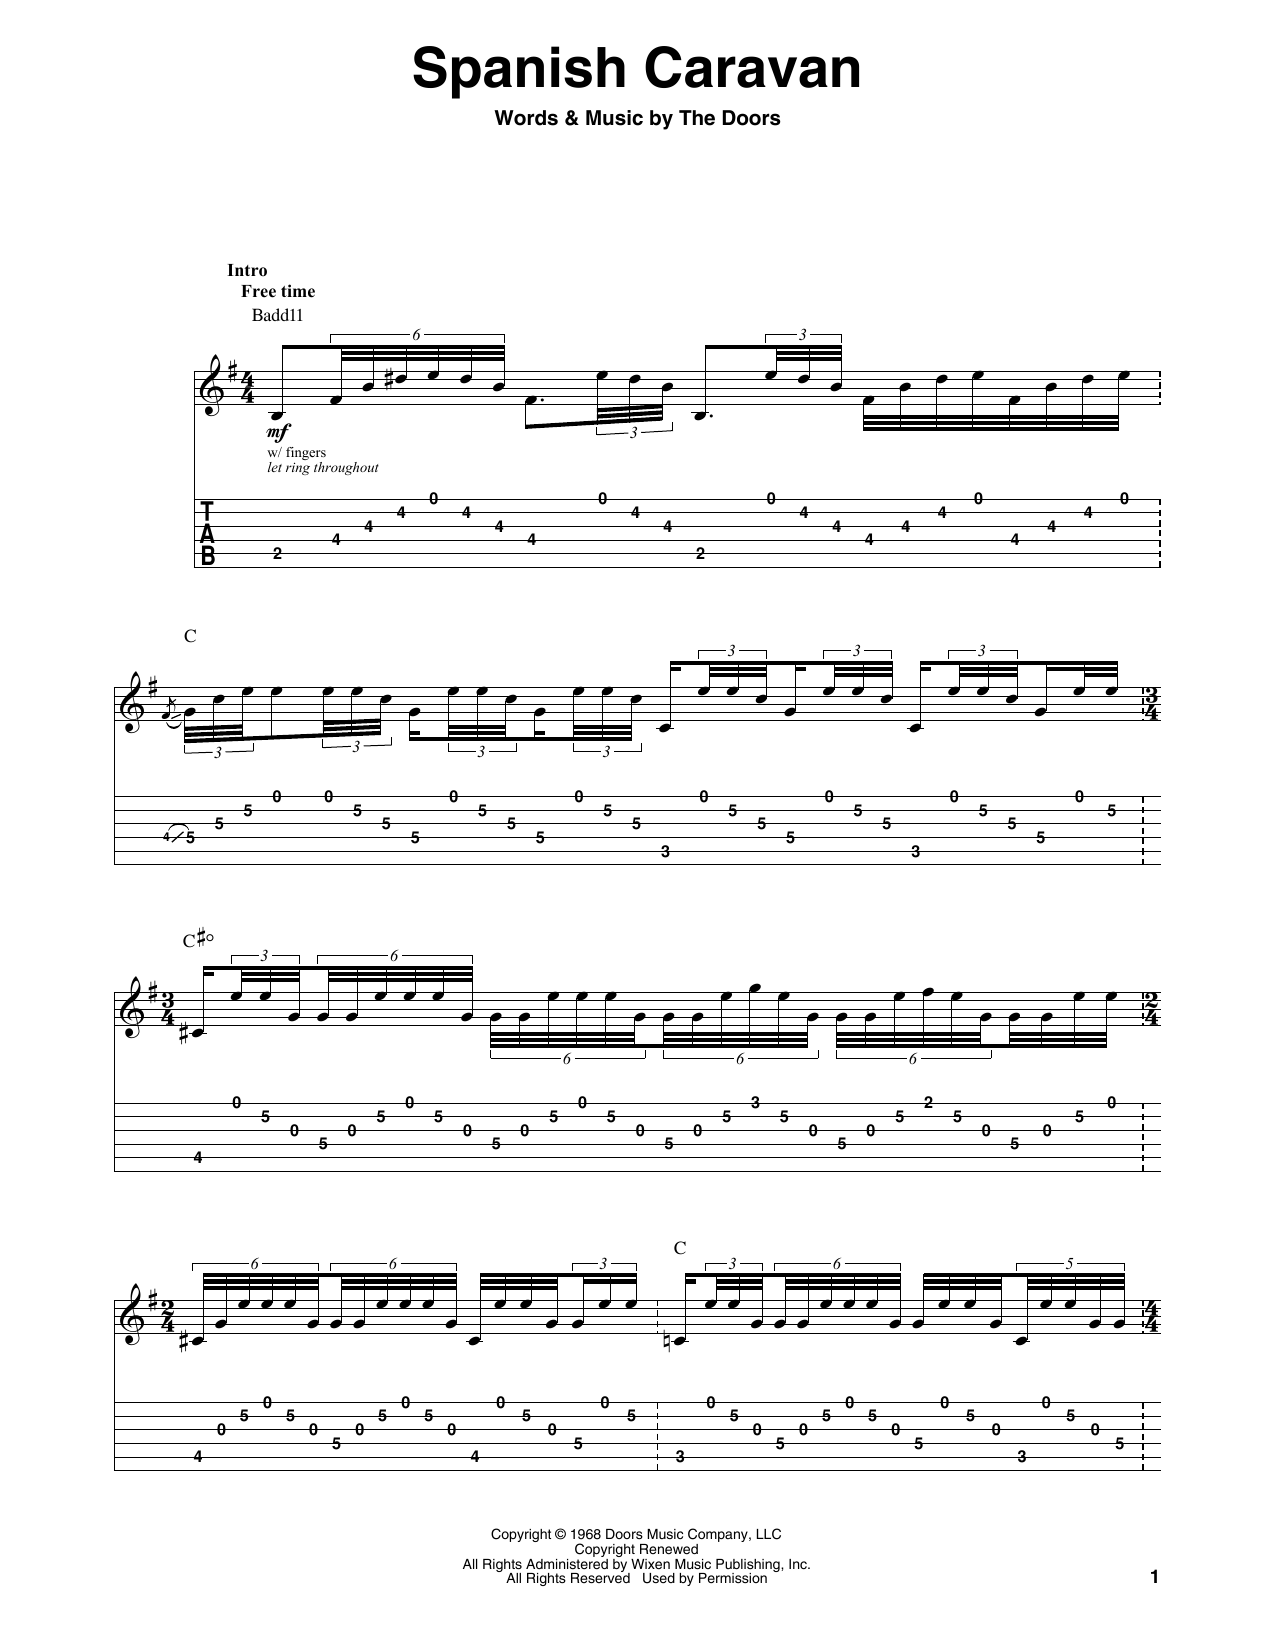 The Doors Spanish Caravan sheet music notes and chords arranged for Guitar Chords/Lyrics